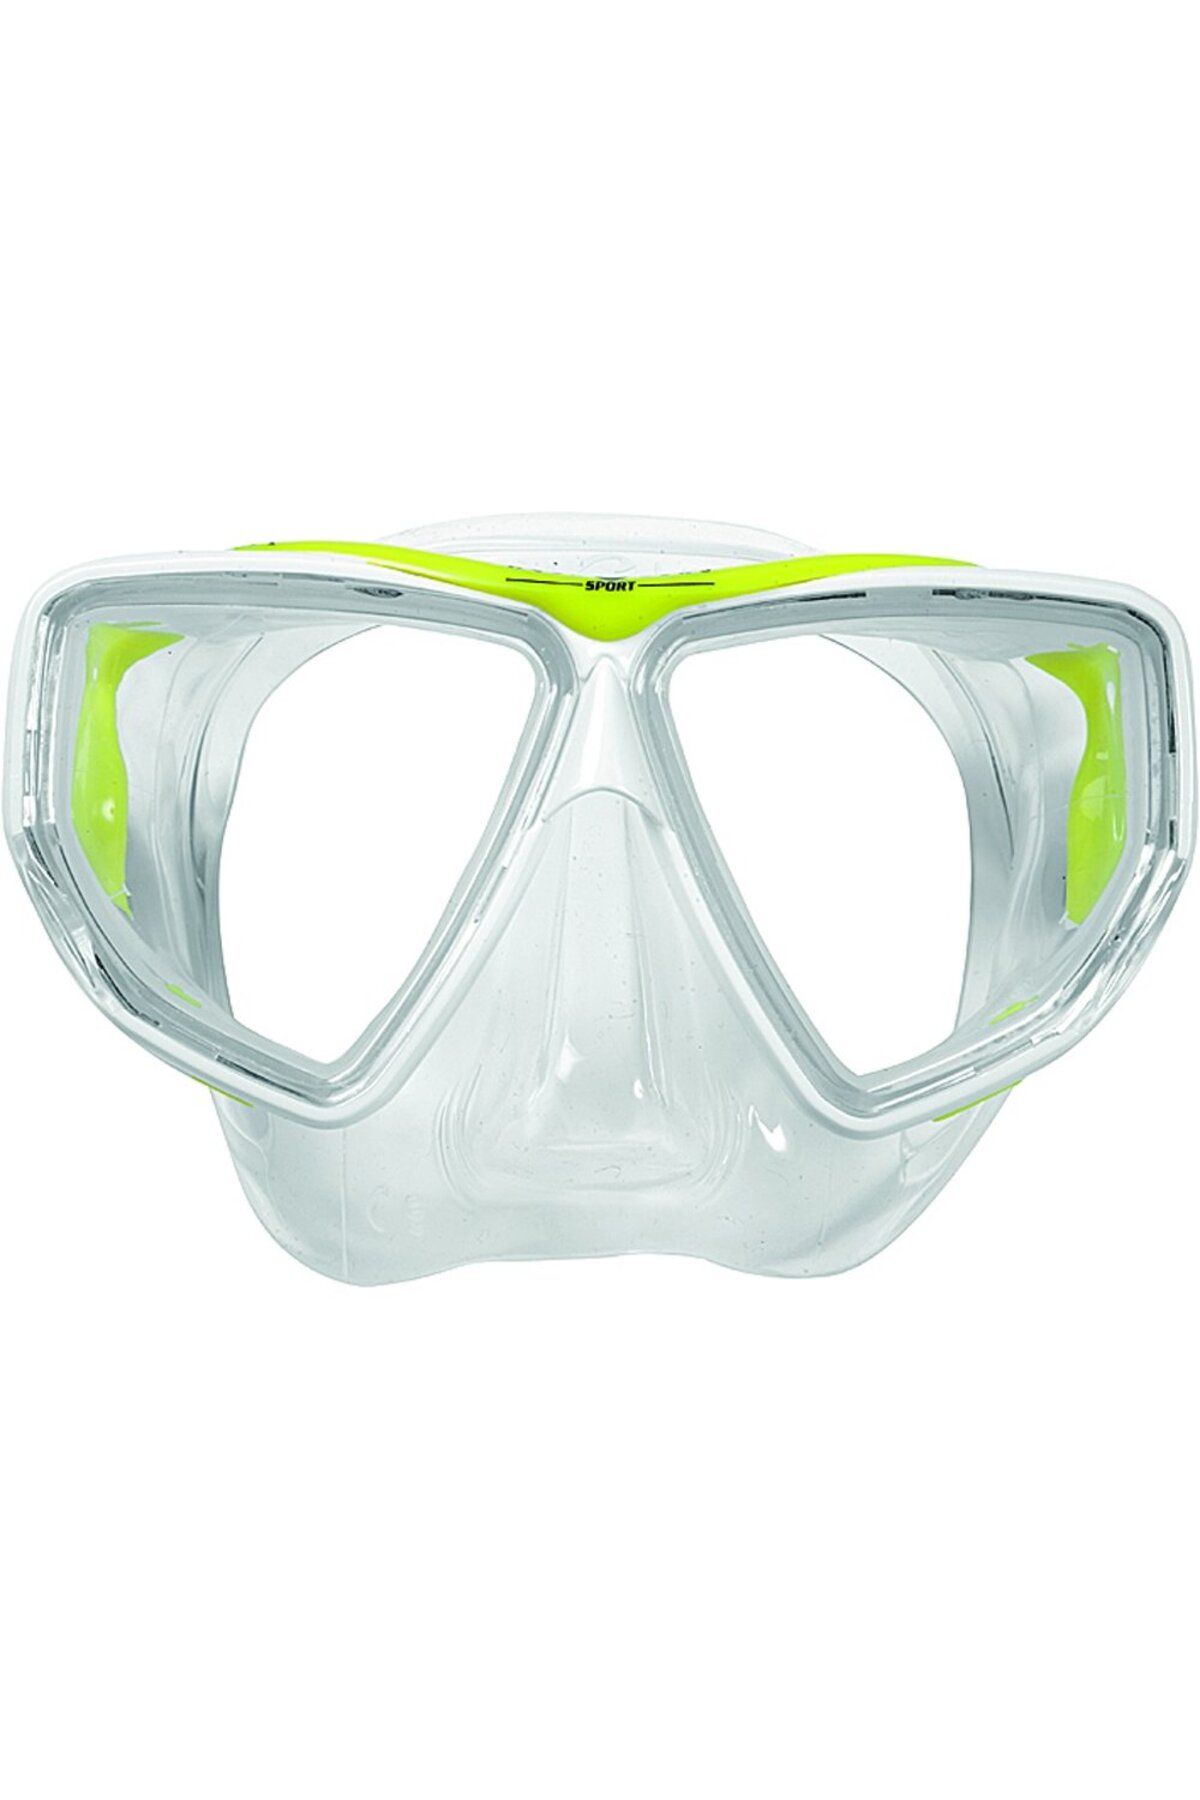 Aqua Lung Maske Kea Lx - Sarı